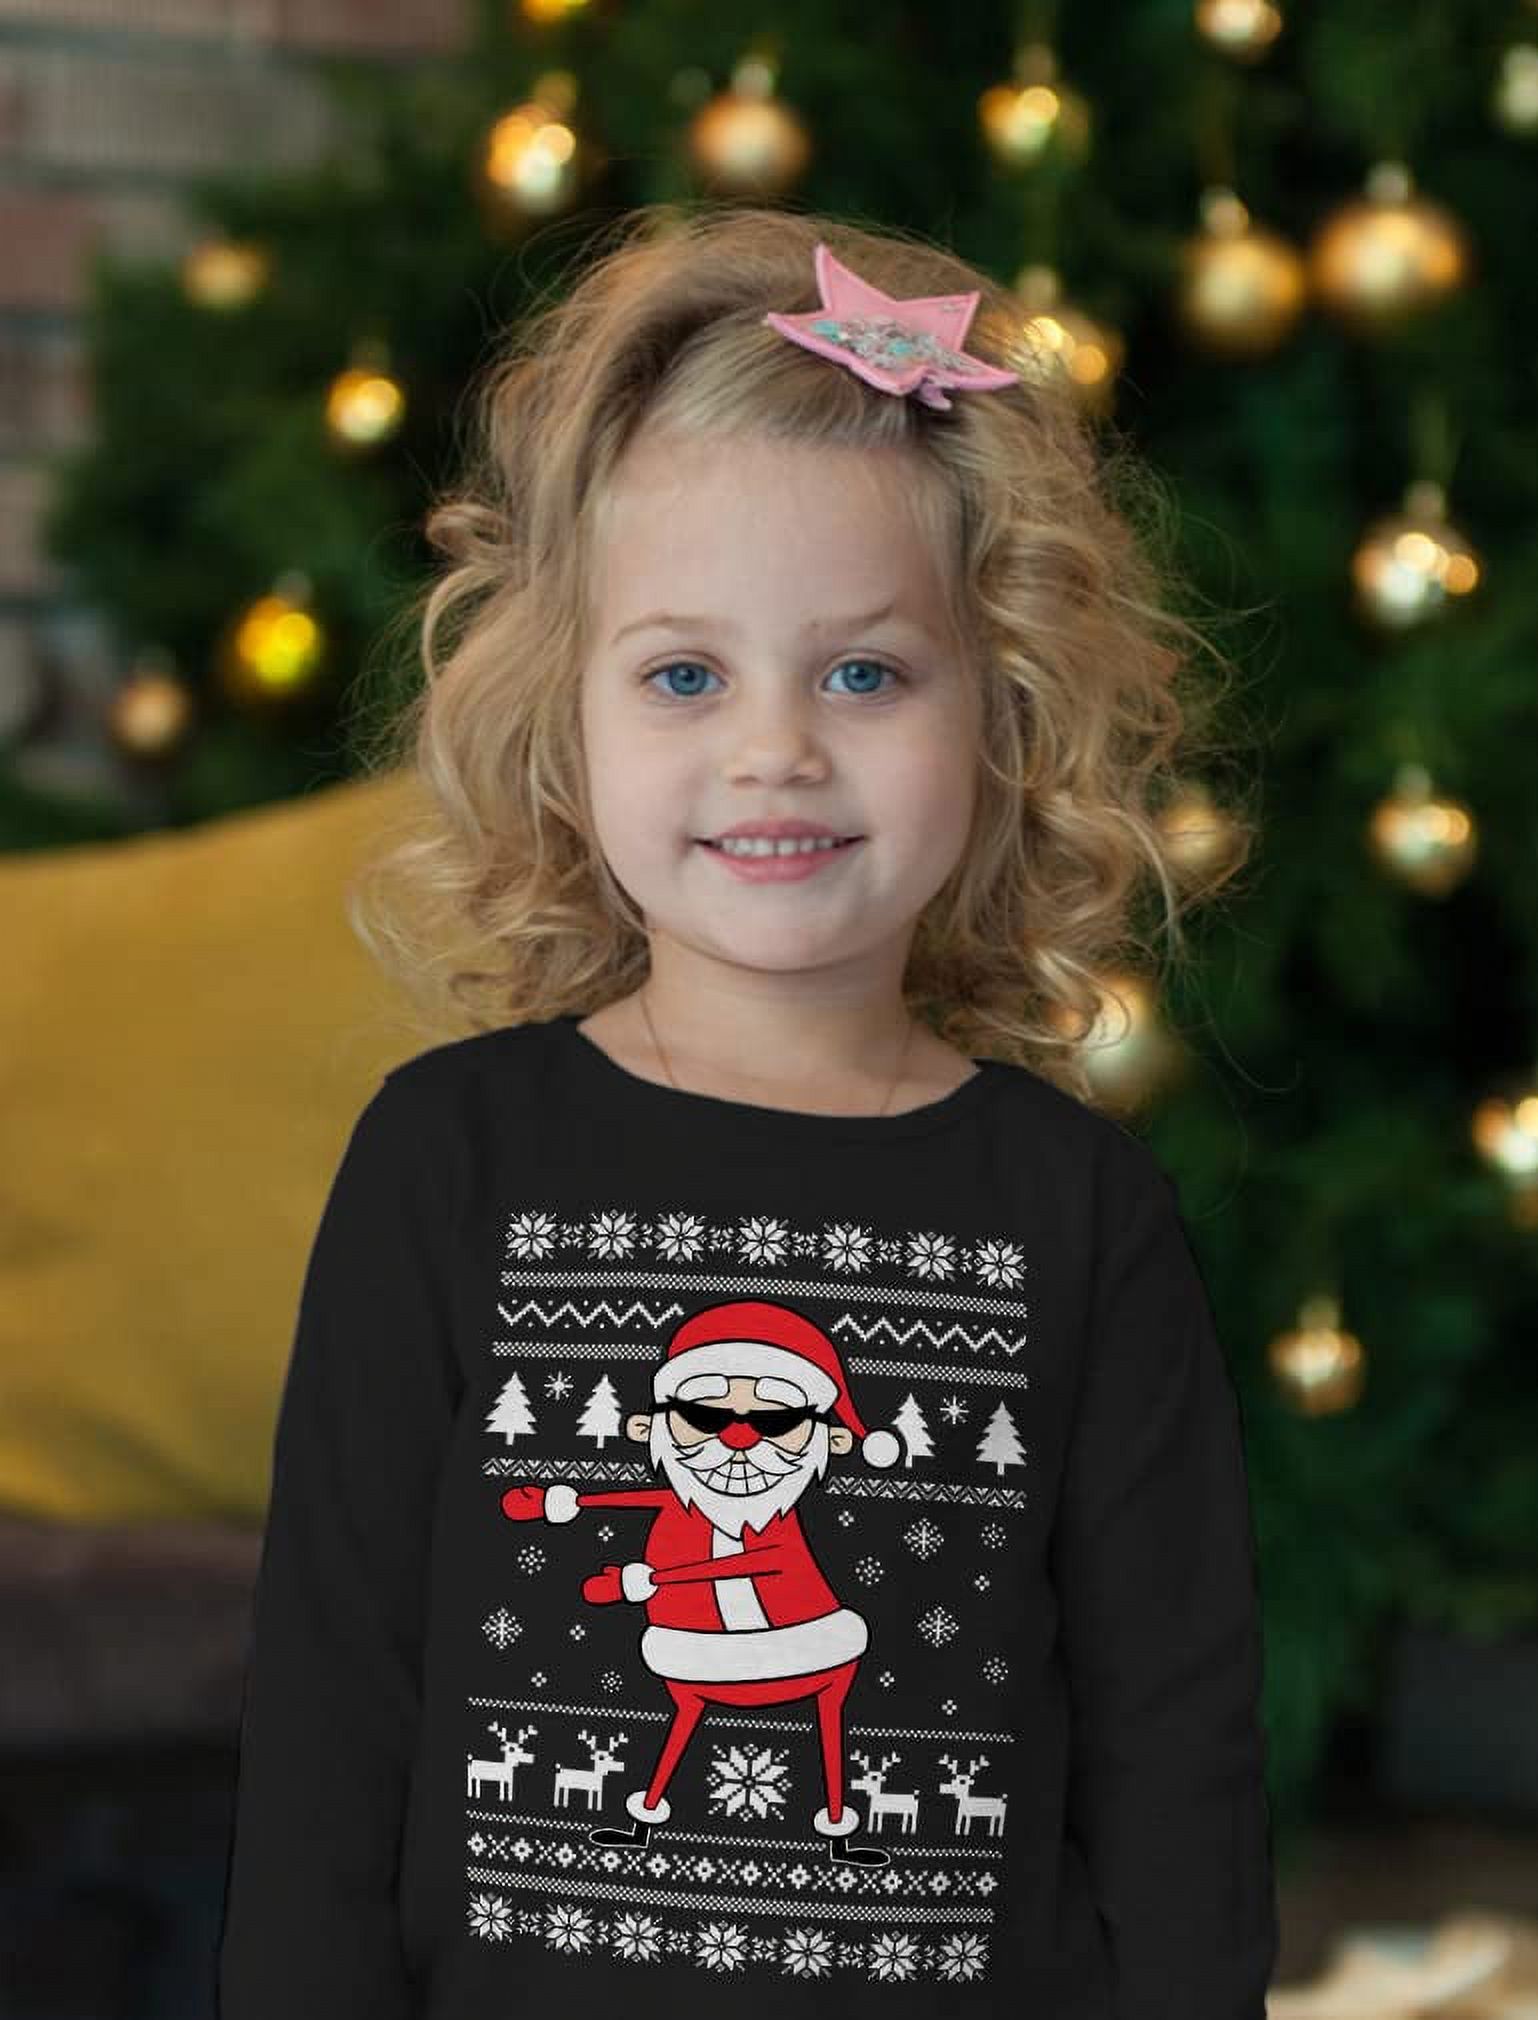 Tstars Boys Unisex Ugly Christmas Sweater Santa Floss Kids Christmas Gift Funny Humor Holiday Shirts Xmas Party Christmas Gifts for Boy Toddler Kids Long Sleeve T Shirt Ugly Xmas Sweater - image 2 of 6